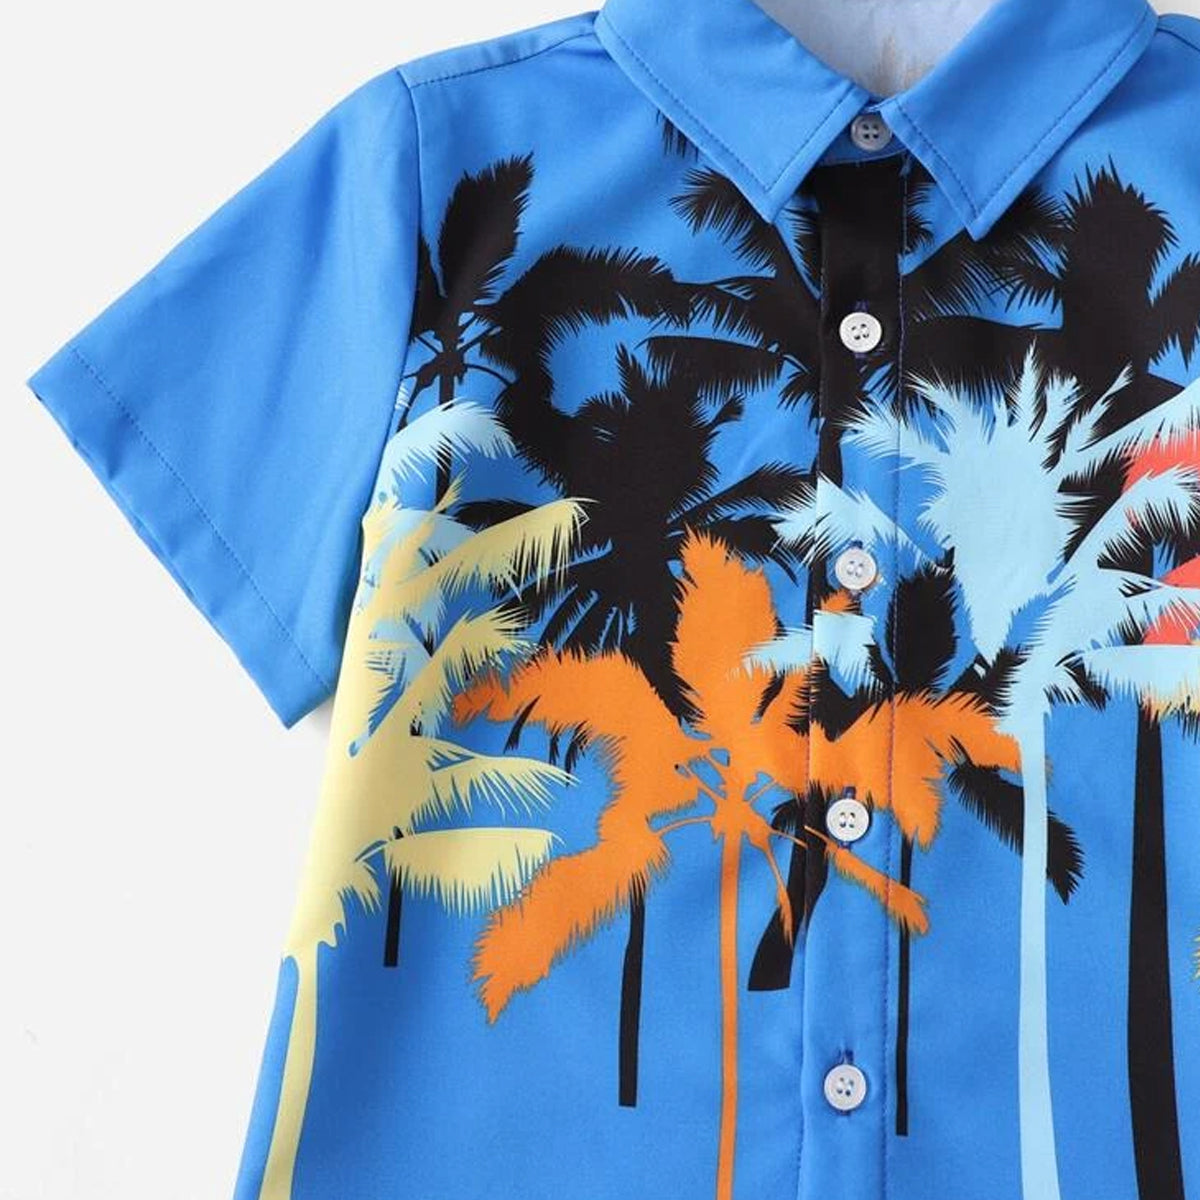 Venutaloza Boys Coconut Tree Print Shirt For Boy.